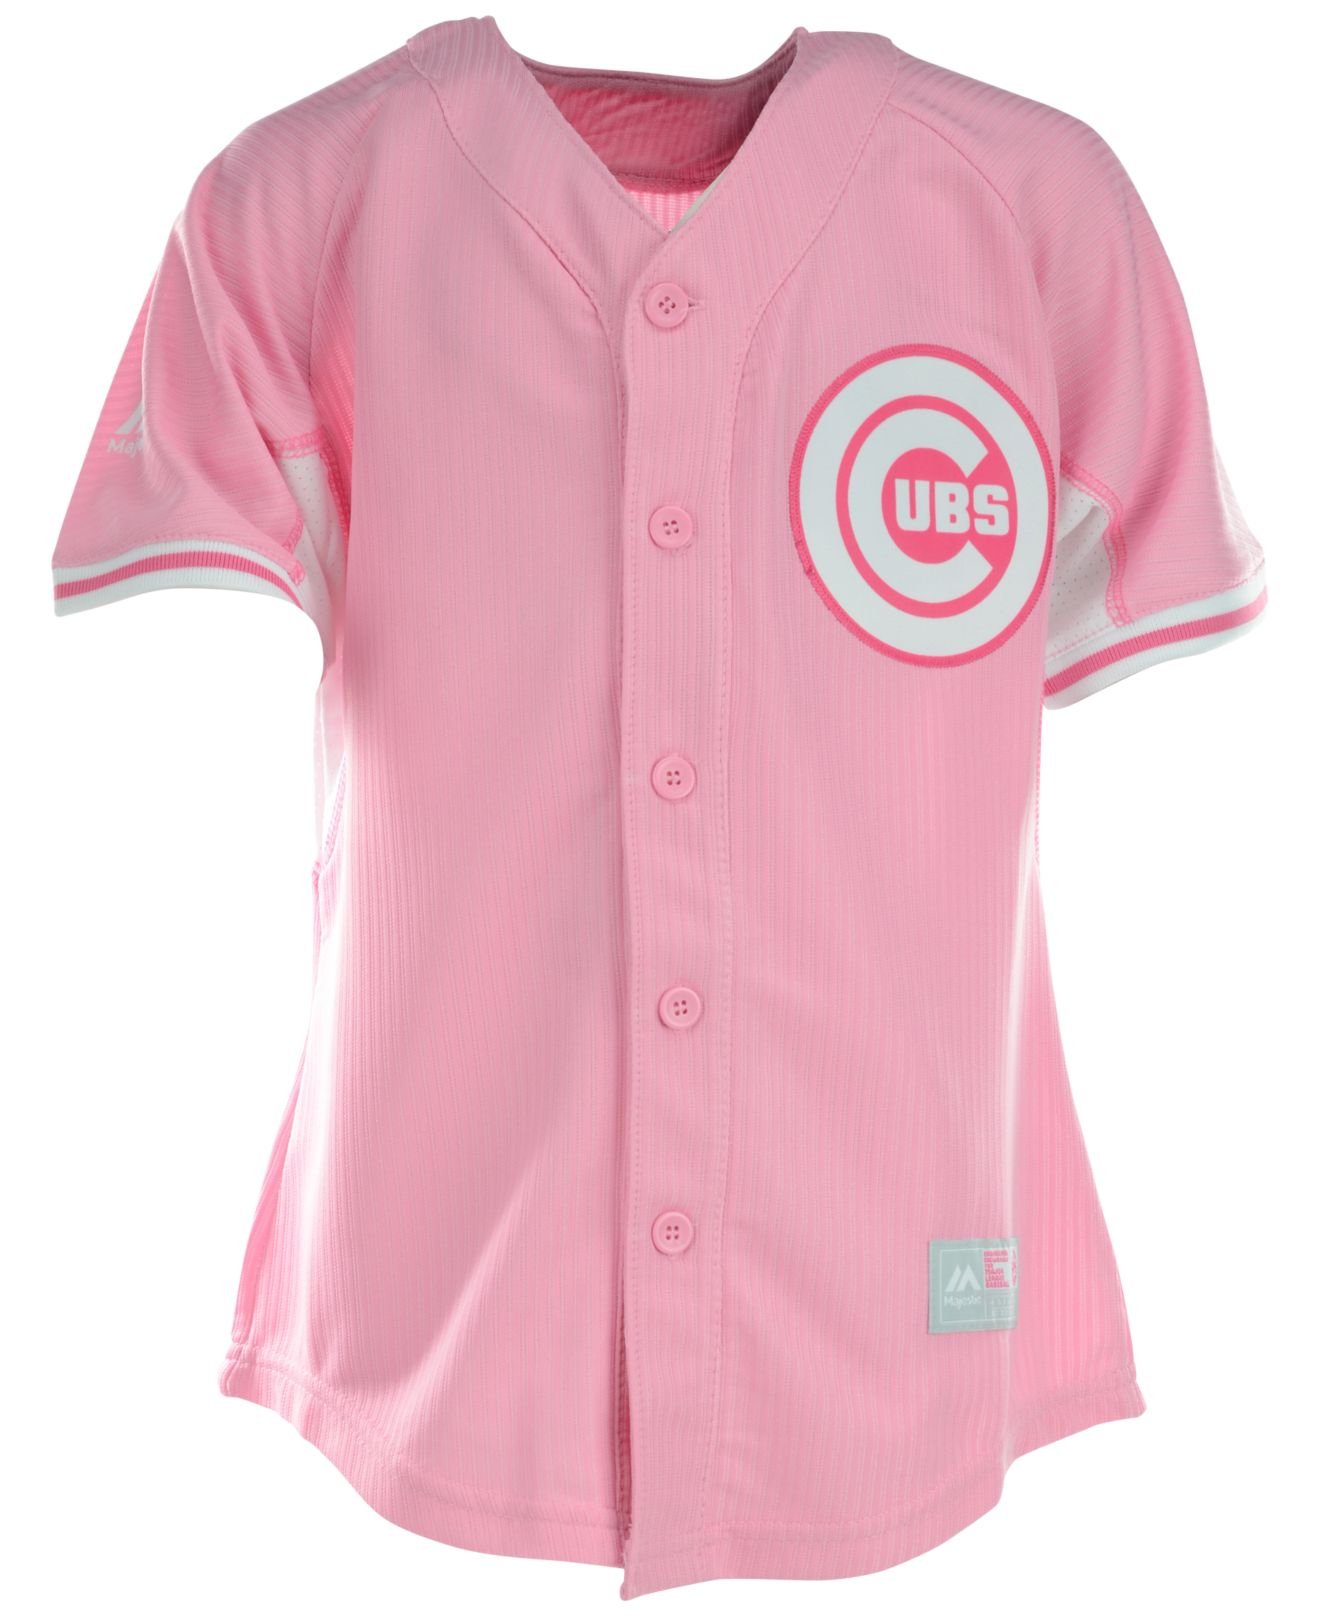 cubs jersey pink